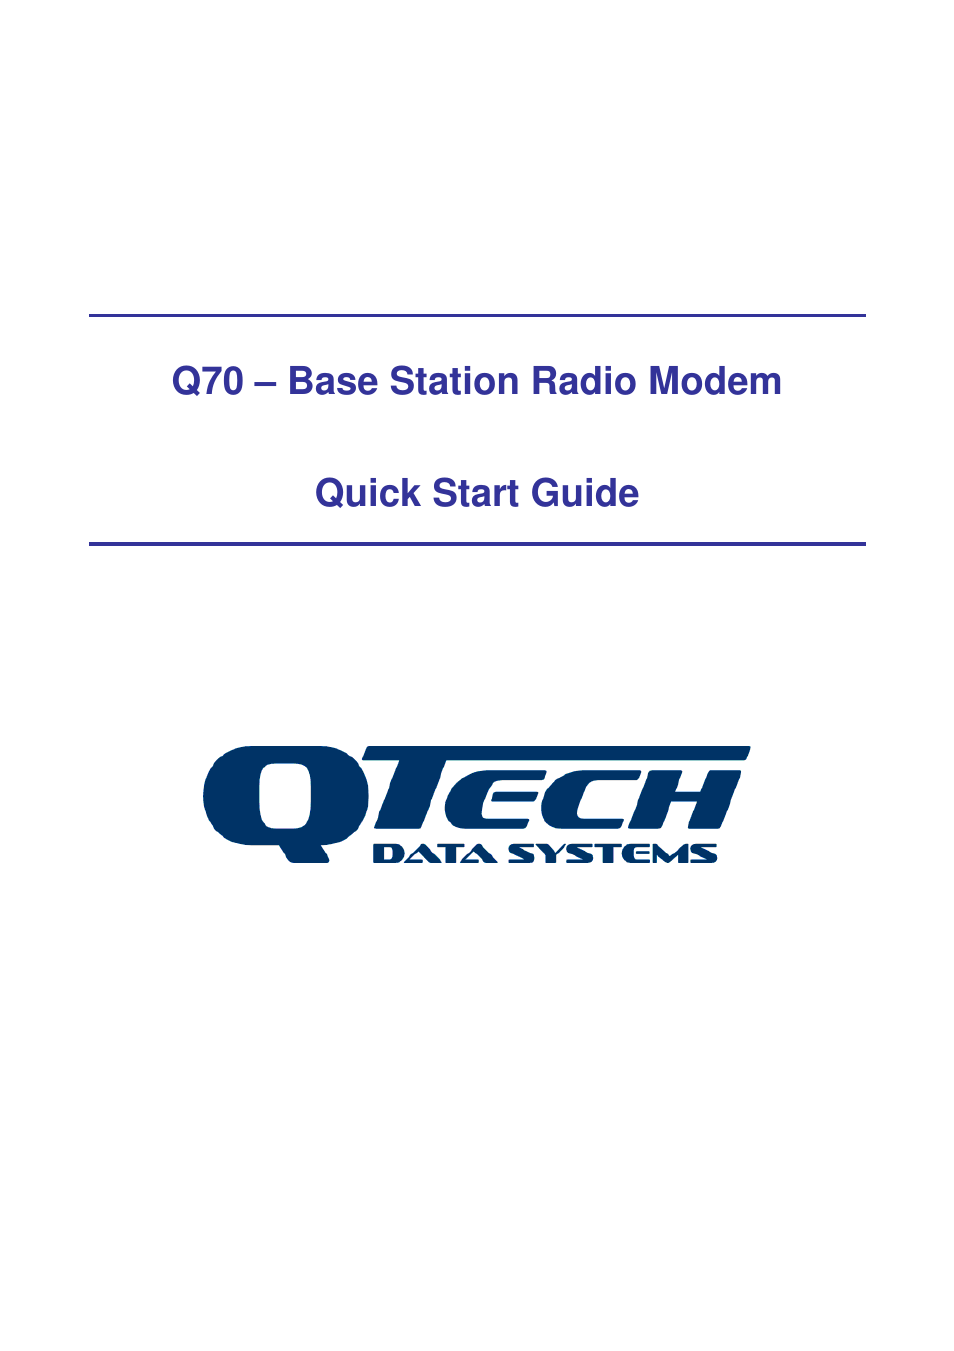 Q70 Base Station Modem